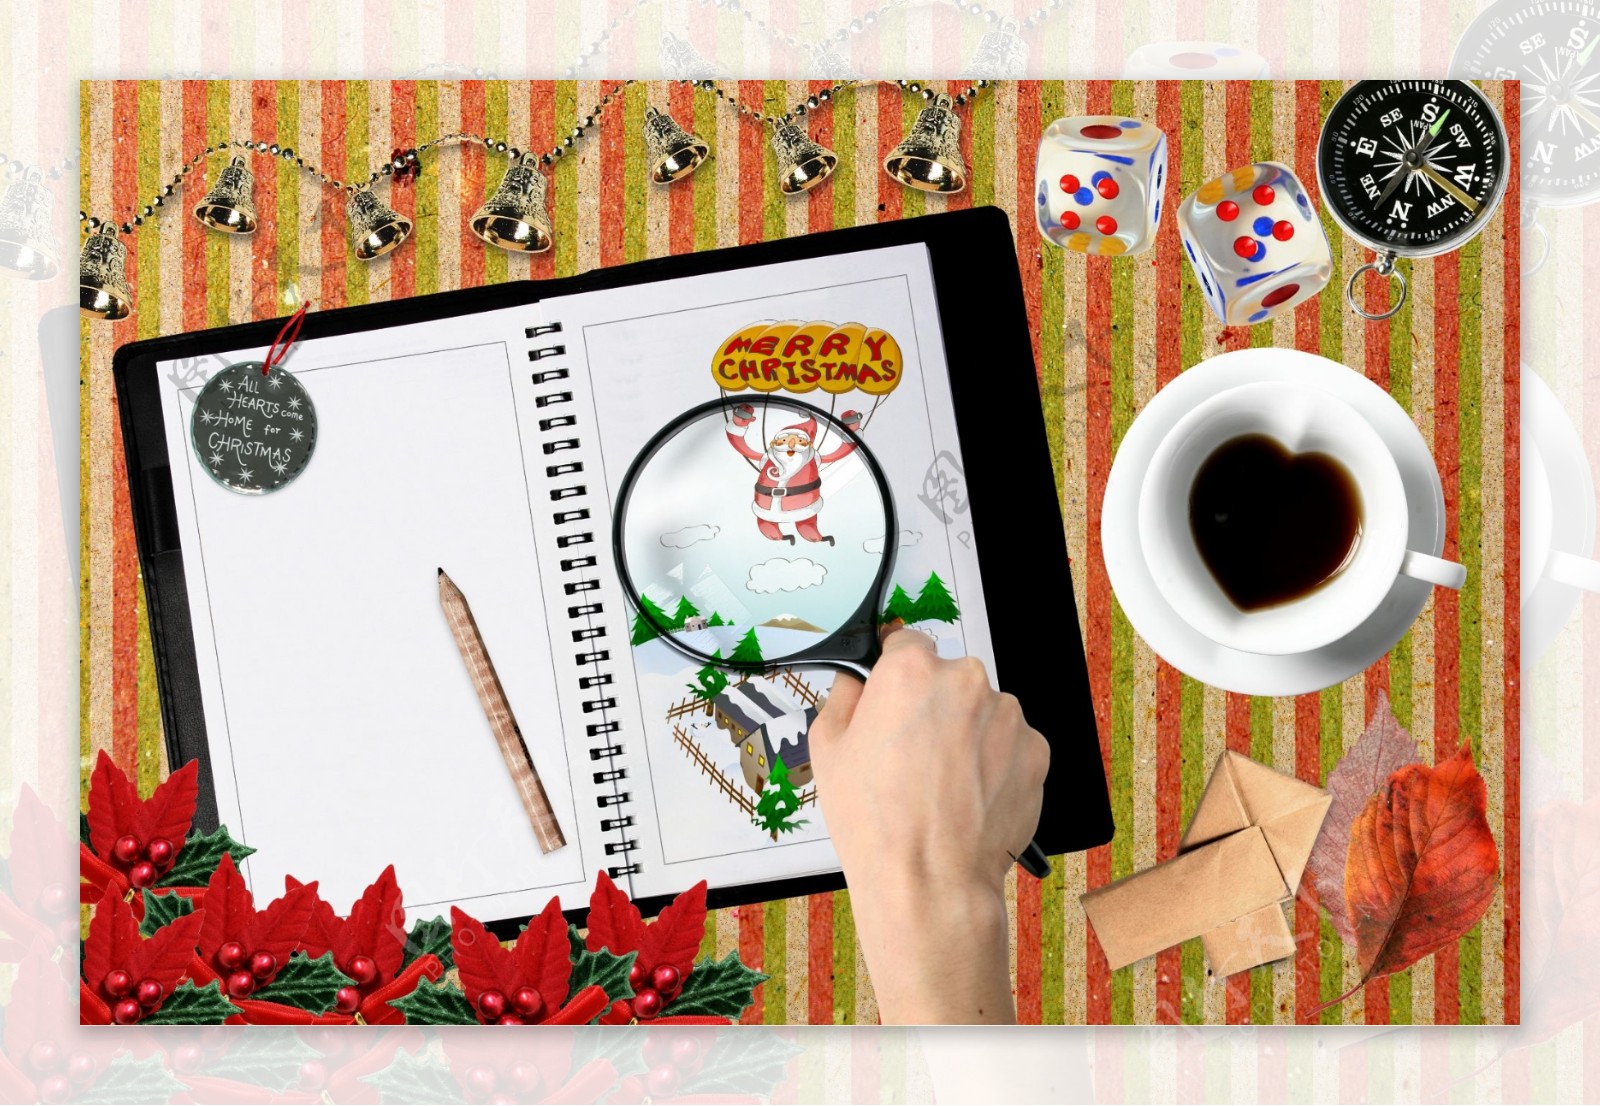 HanMaker韩国设计素材库背景图片卡片礼物祝福圣诞咖啡本子笔放大镜骰子叶子